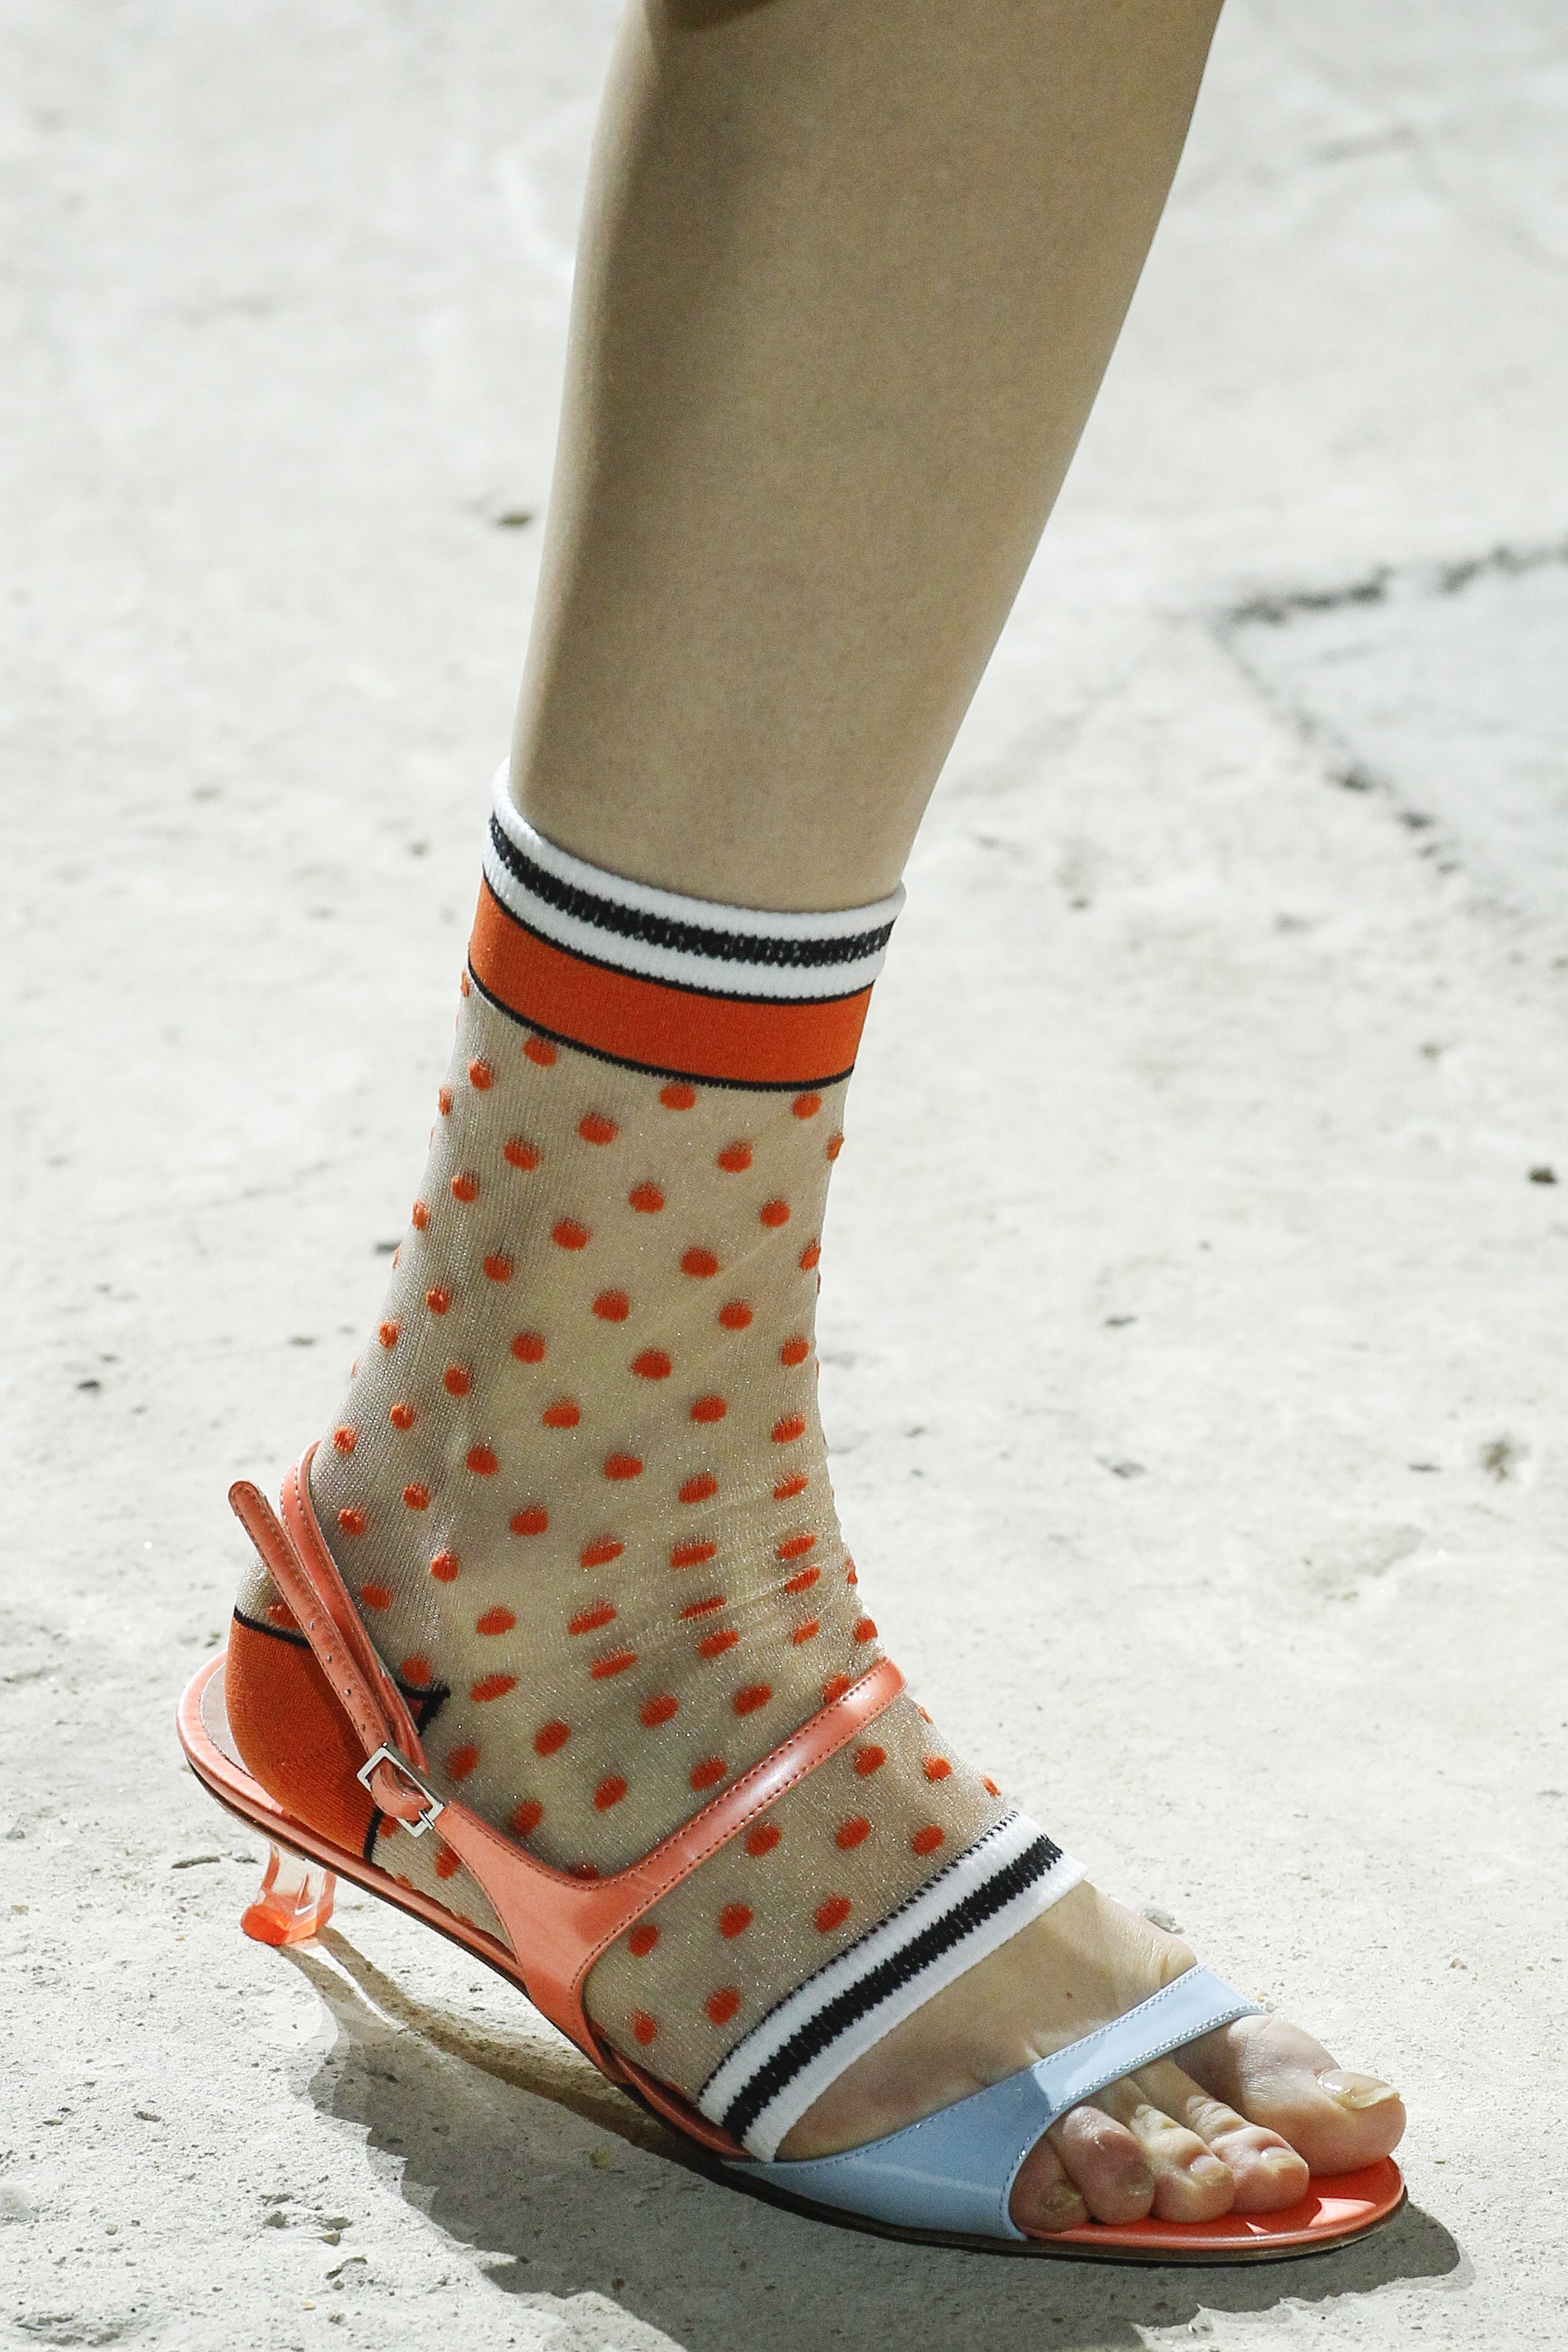 Rebekka Eriksen's Feet - I piedi di Rebekka Eriksen - Celebrities Feet 2022